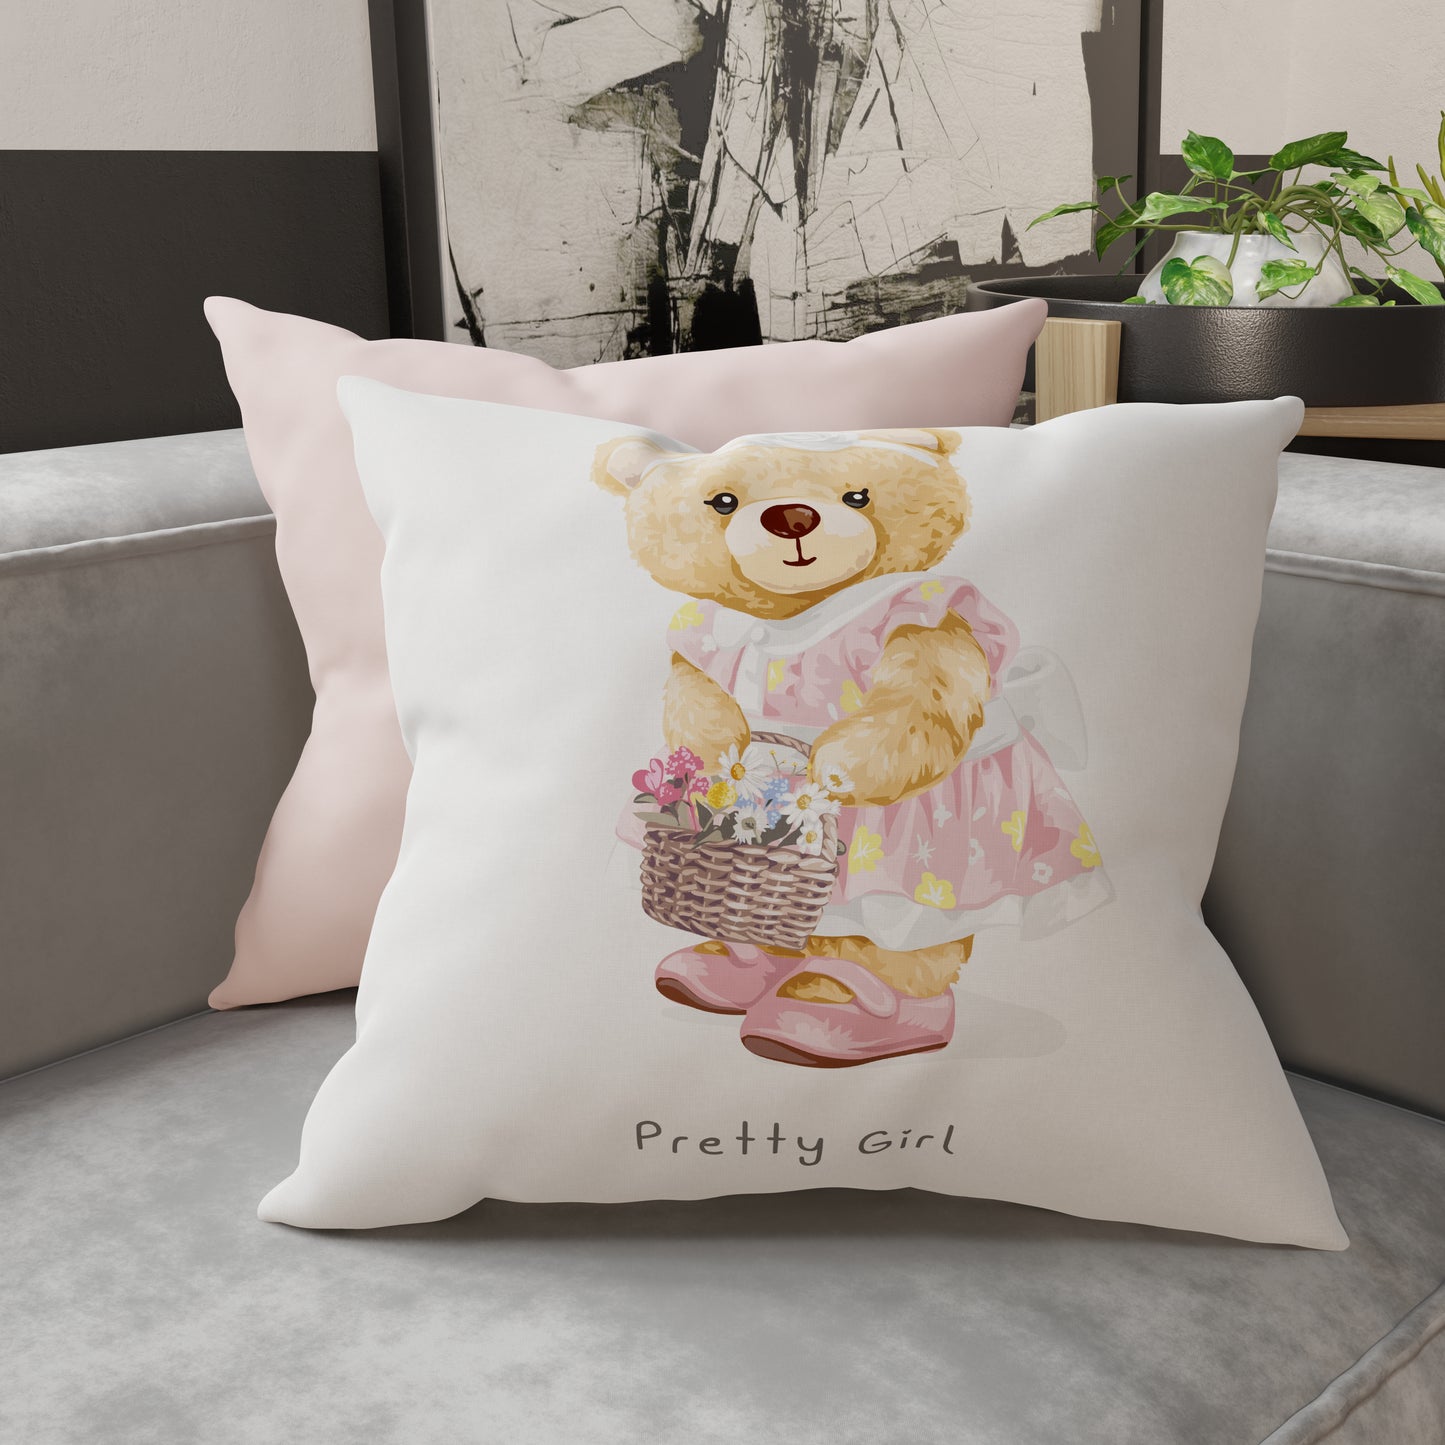 Cushions, Sofa Cushion Covers, Furnishing Cushions in Teddy Girl Digital Print